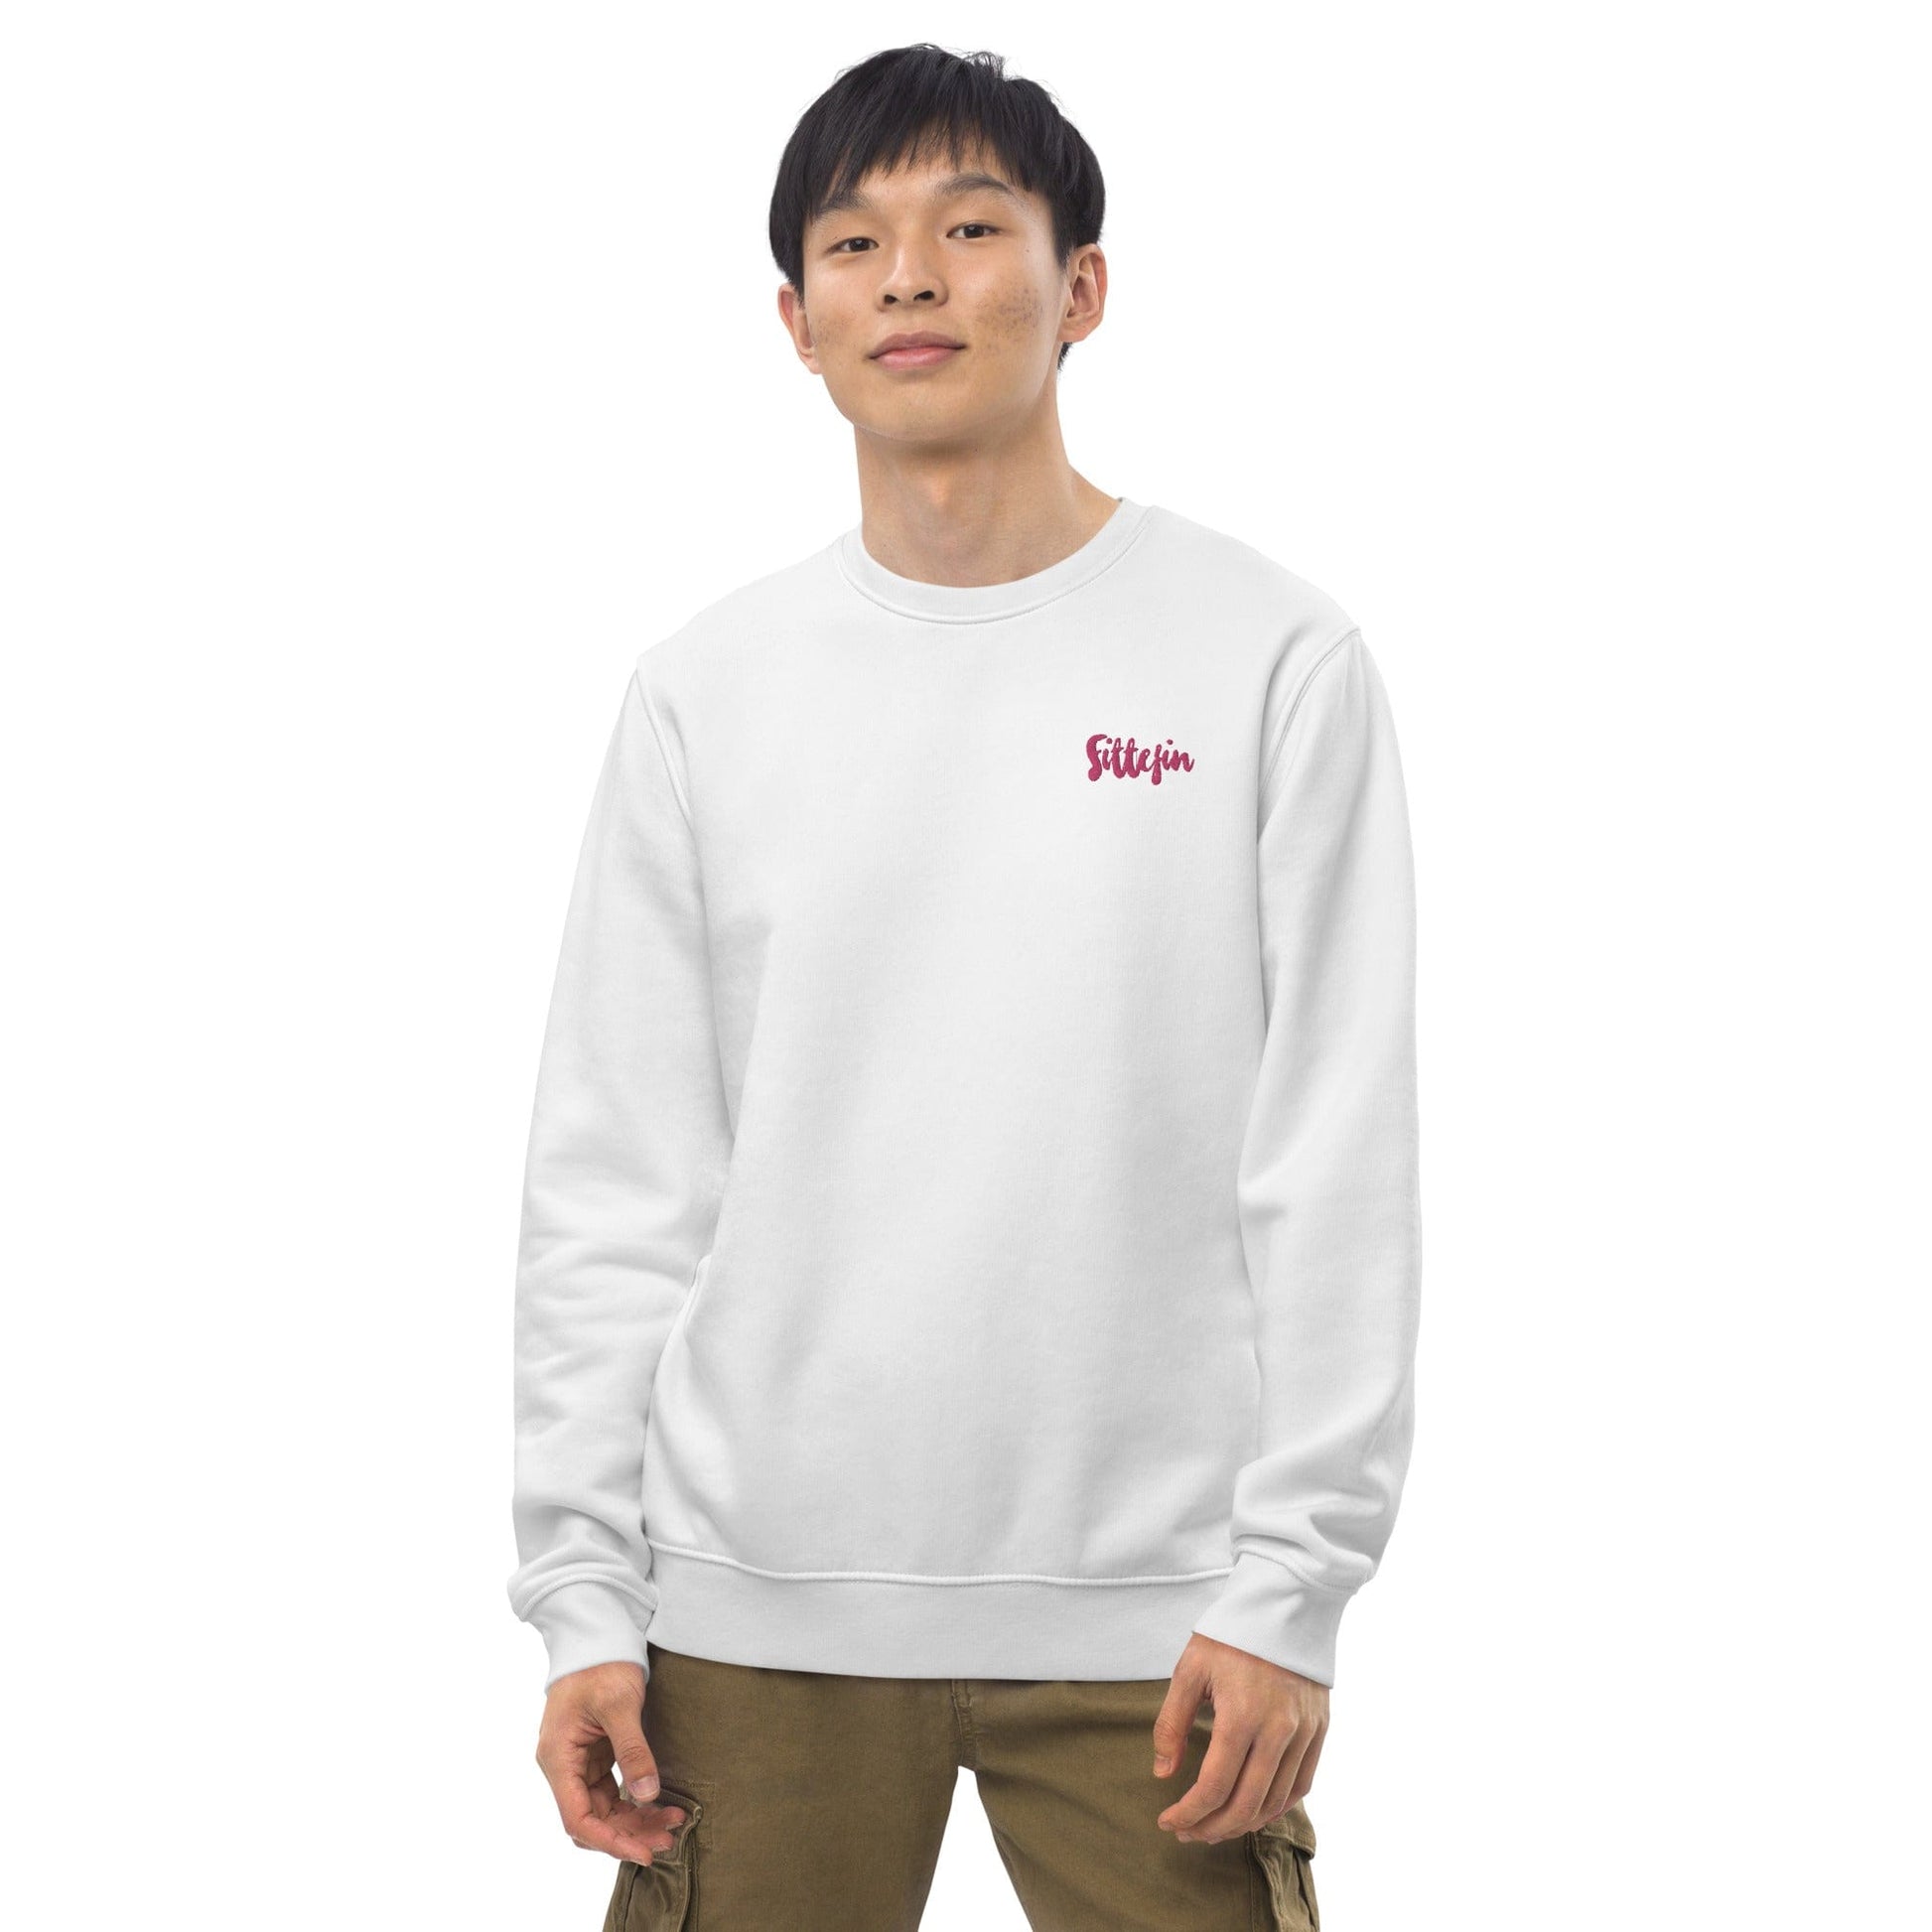 VAGPWR White / S Fittefin - Unisex eco sweatshirt